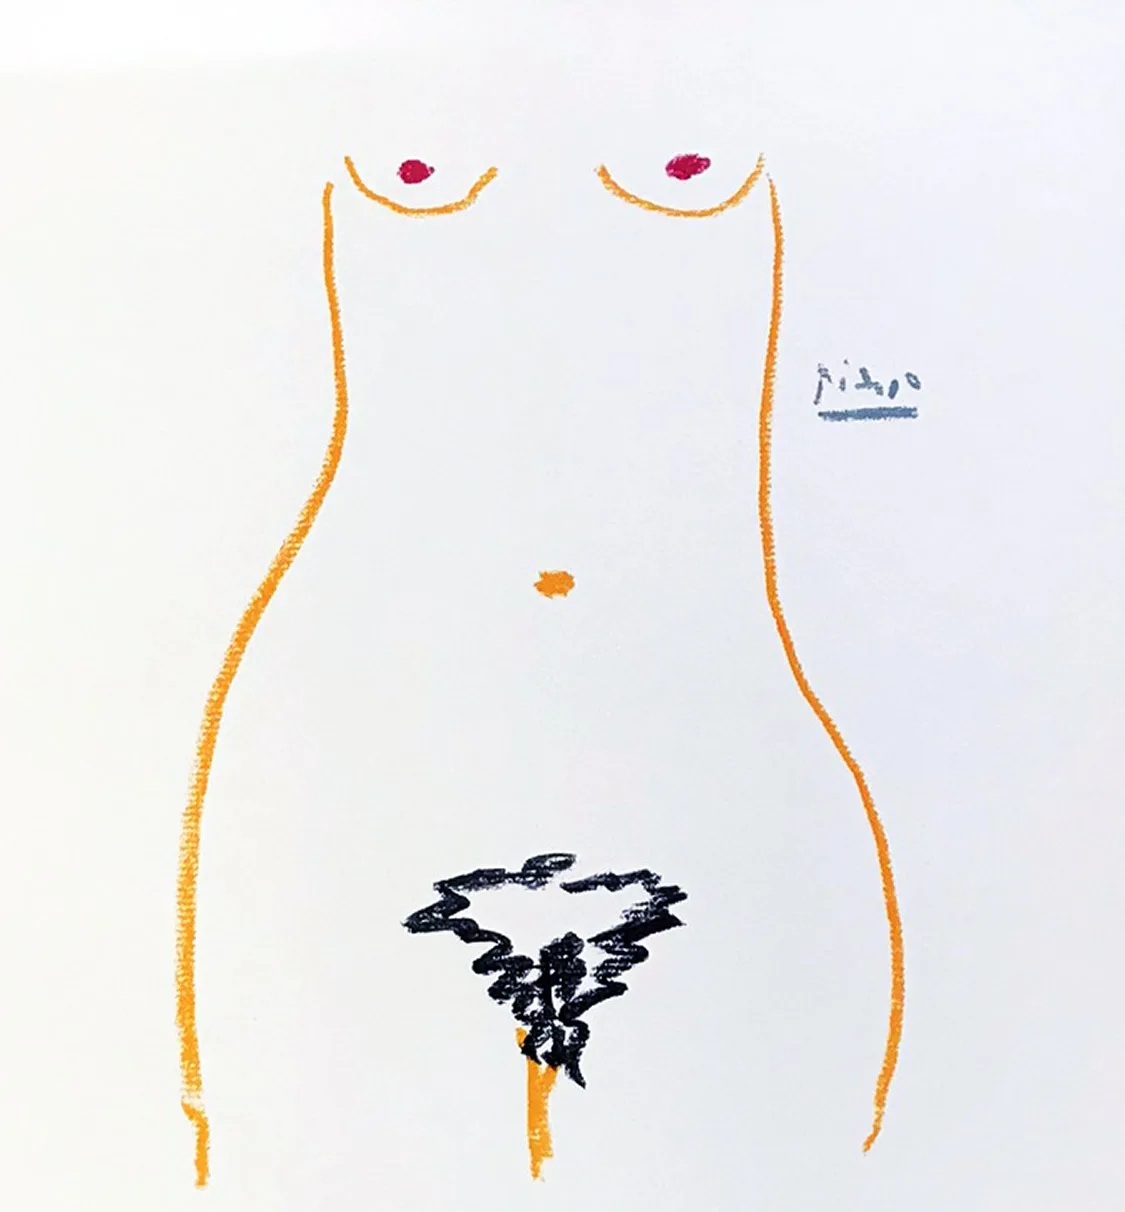 Pablo Picasso Lithograph 39, Eve 1968